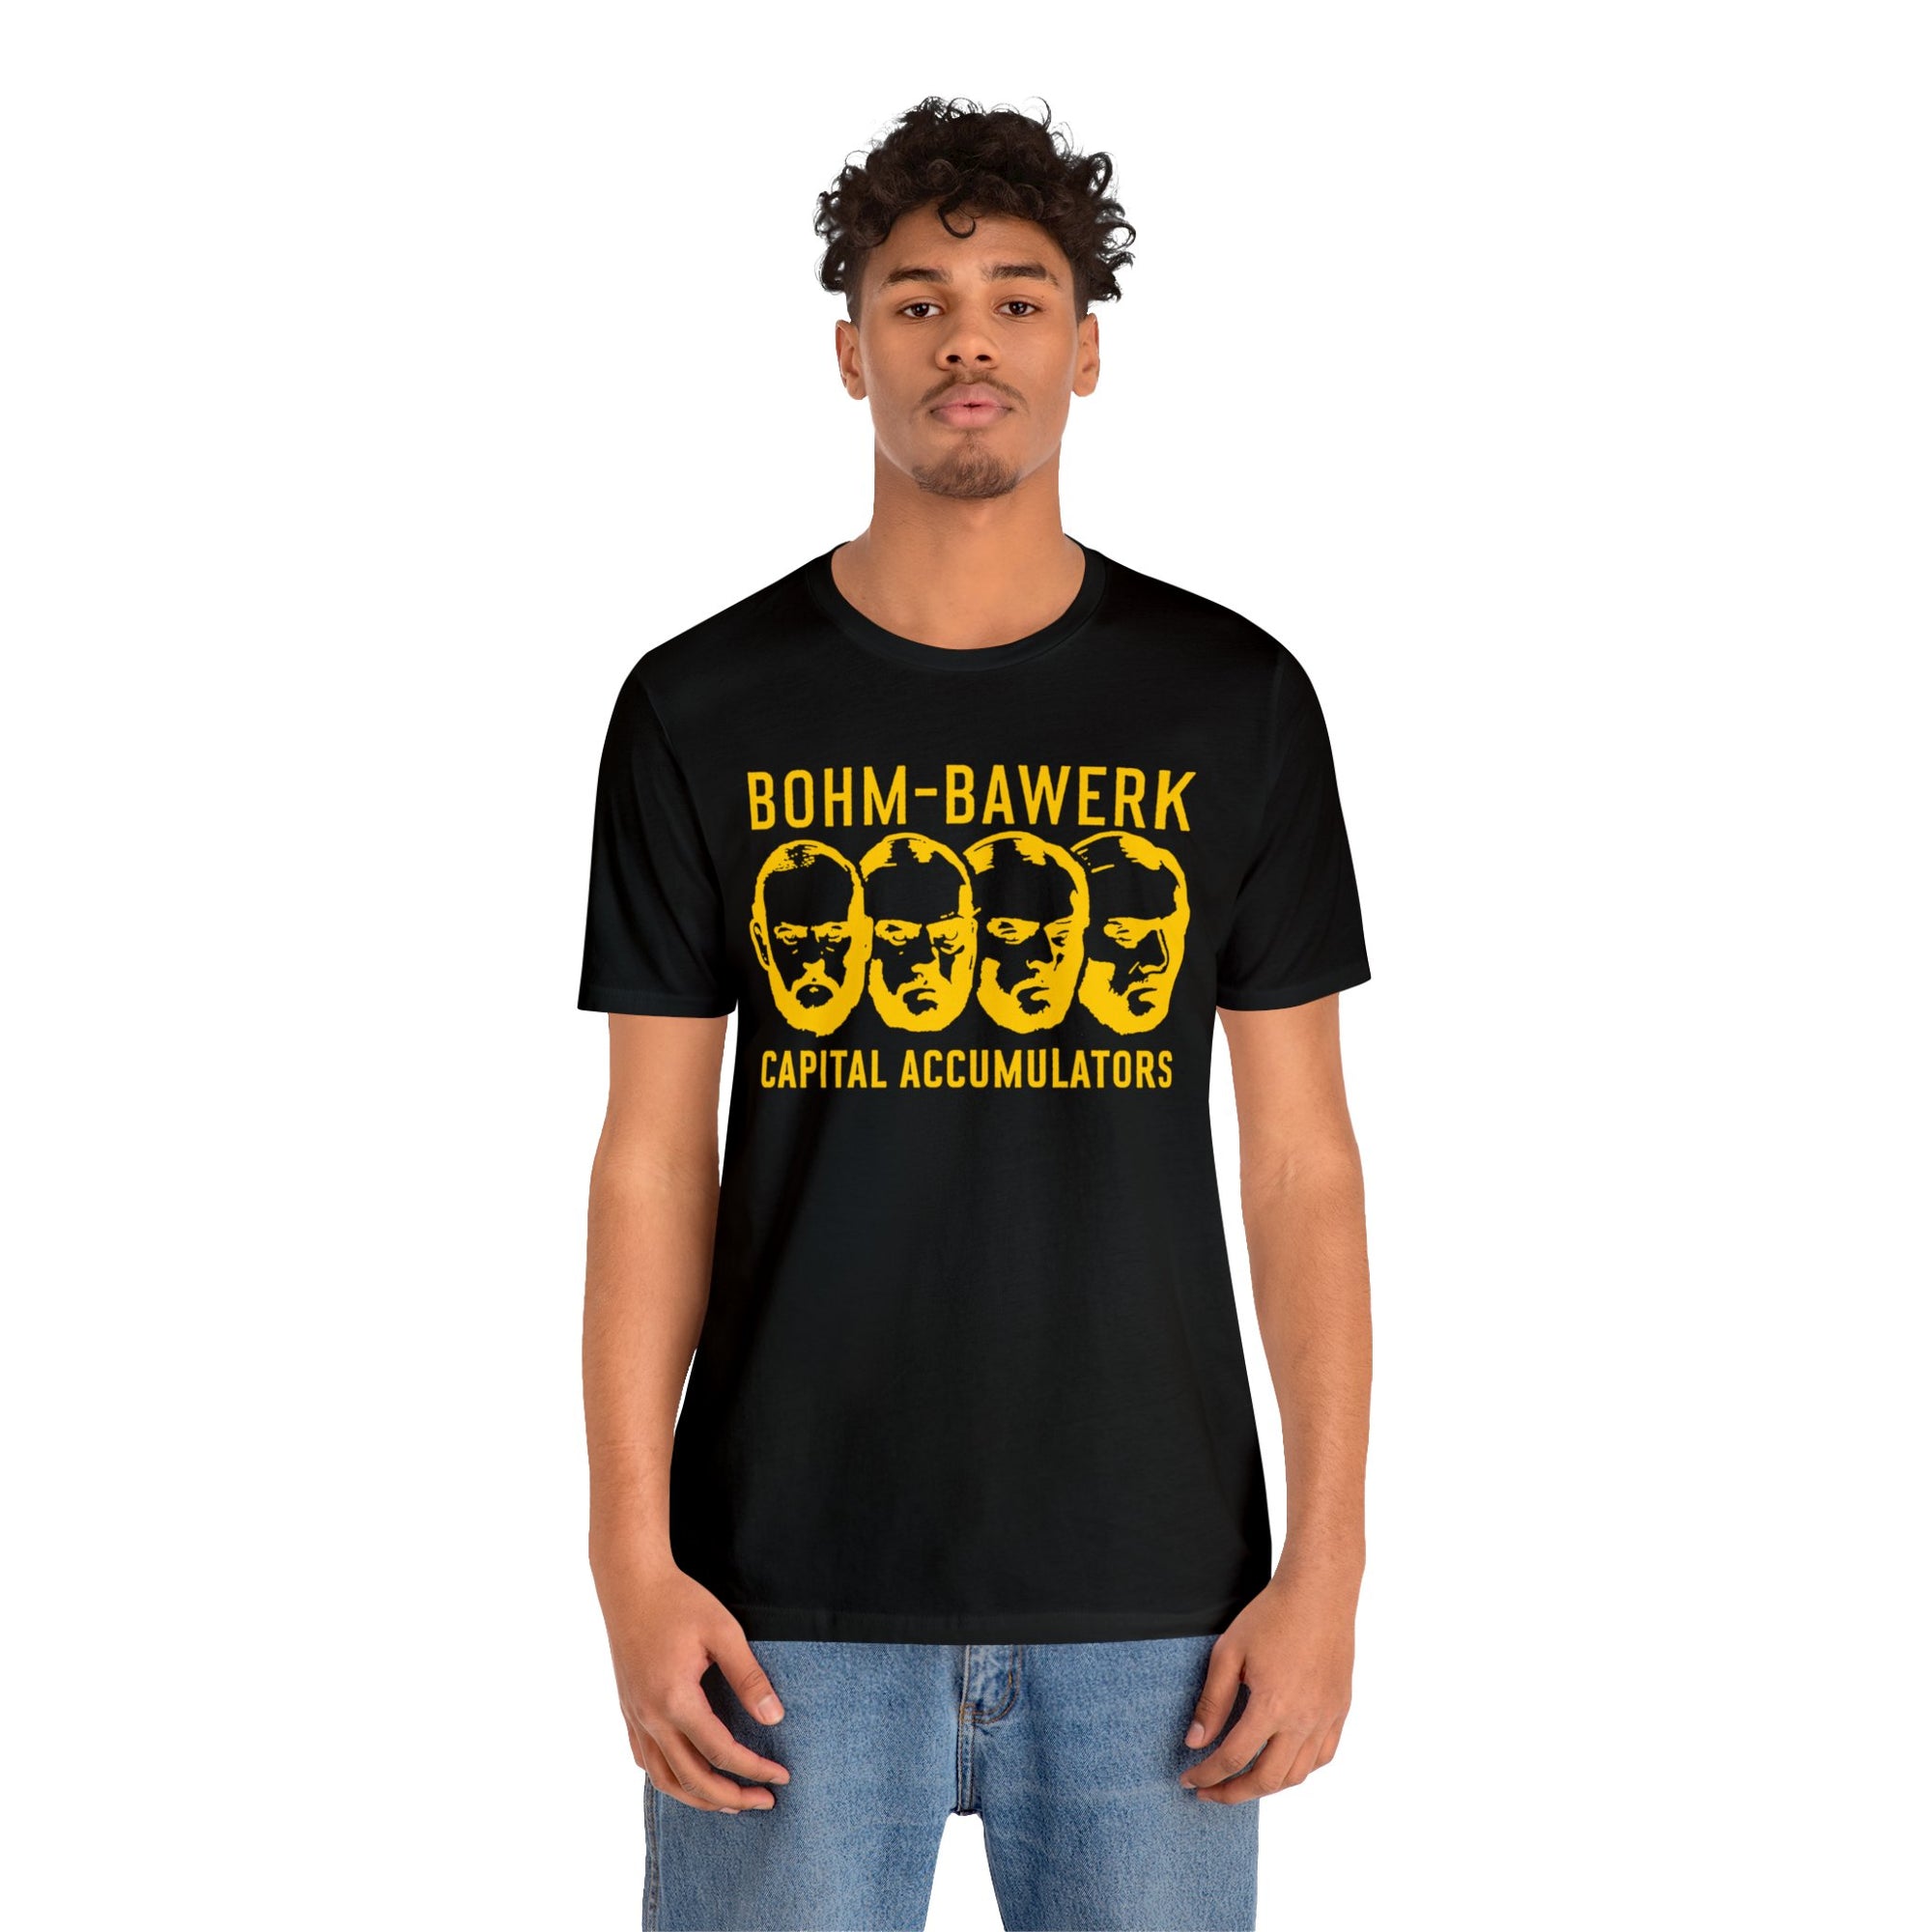 Bohm-Bawerk - Capital Accumulators - Badasses of Thought and Action Crewneck T-shirt